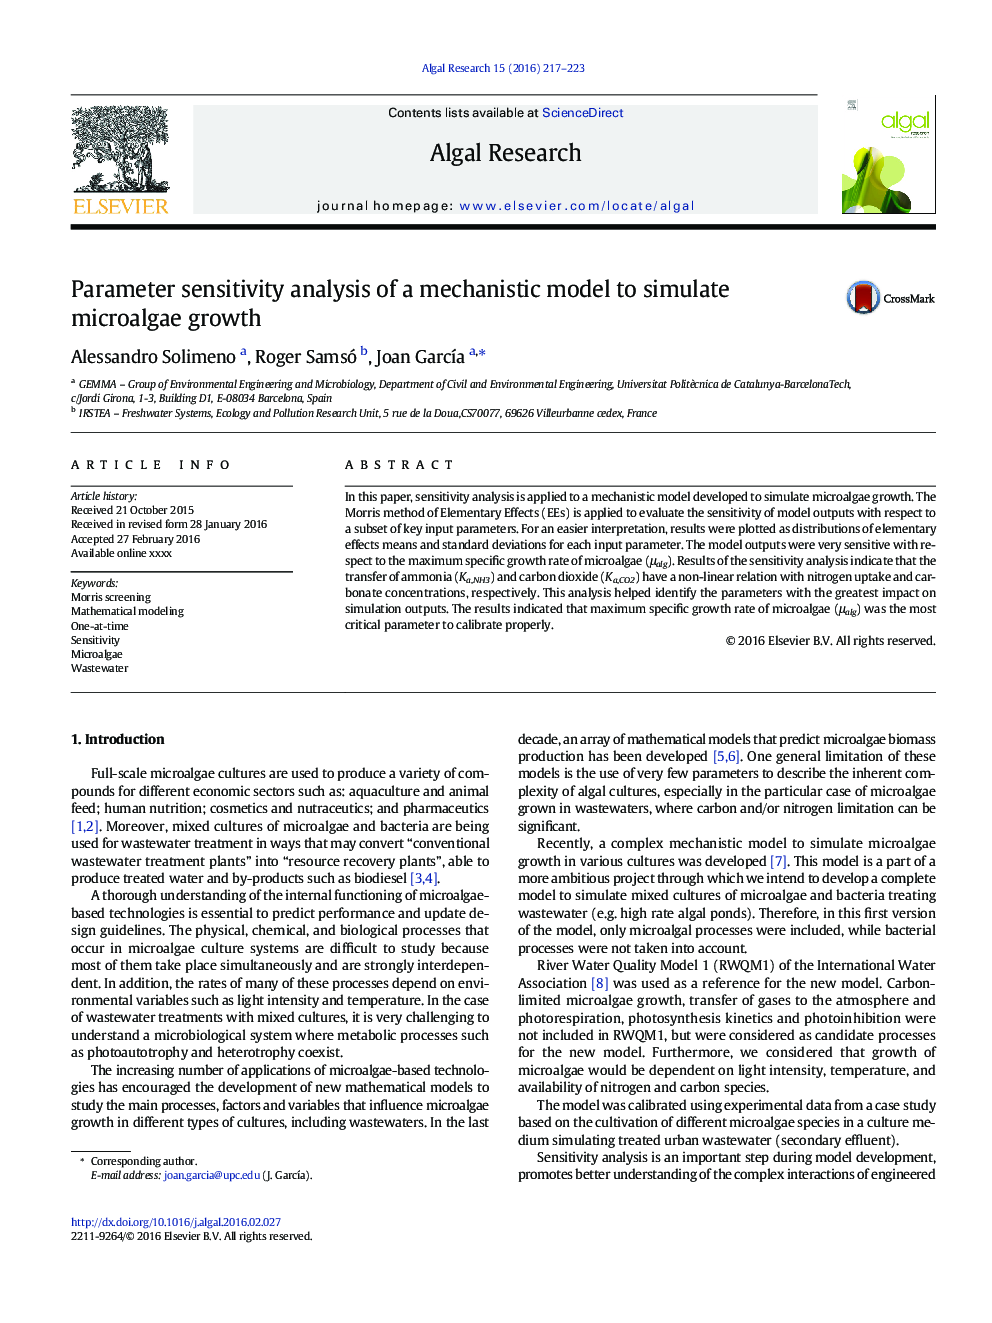 Parameter sensitivity analysis of a mechanistic model to simulate microalgae growth